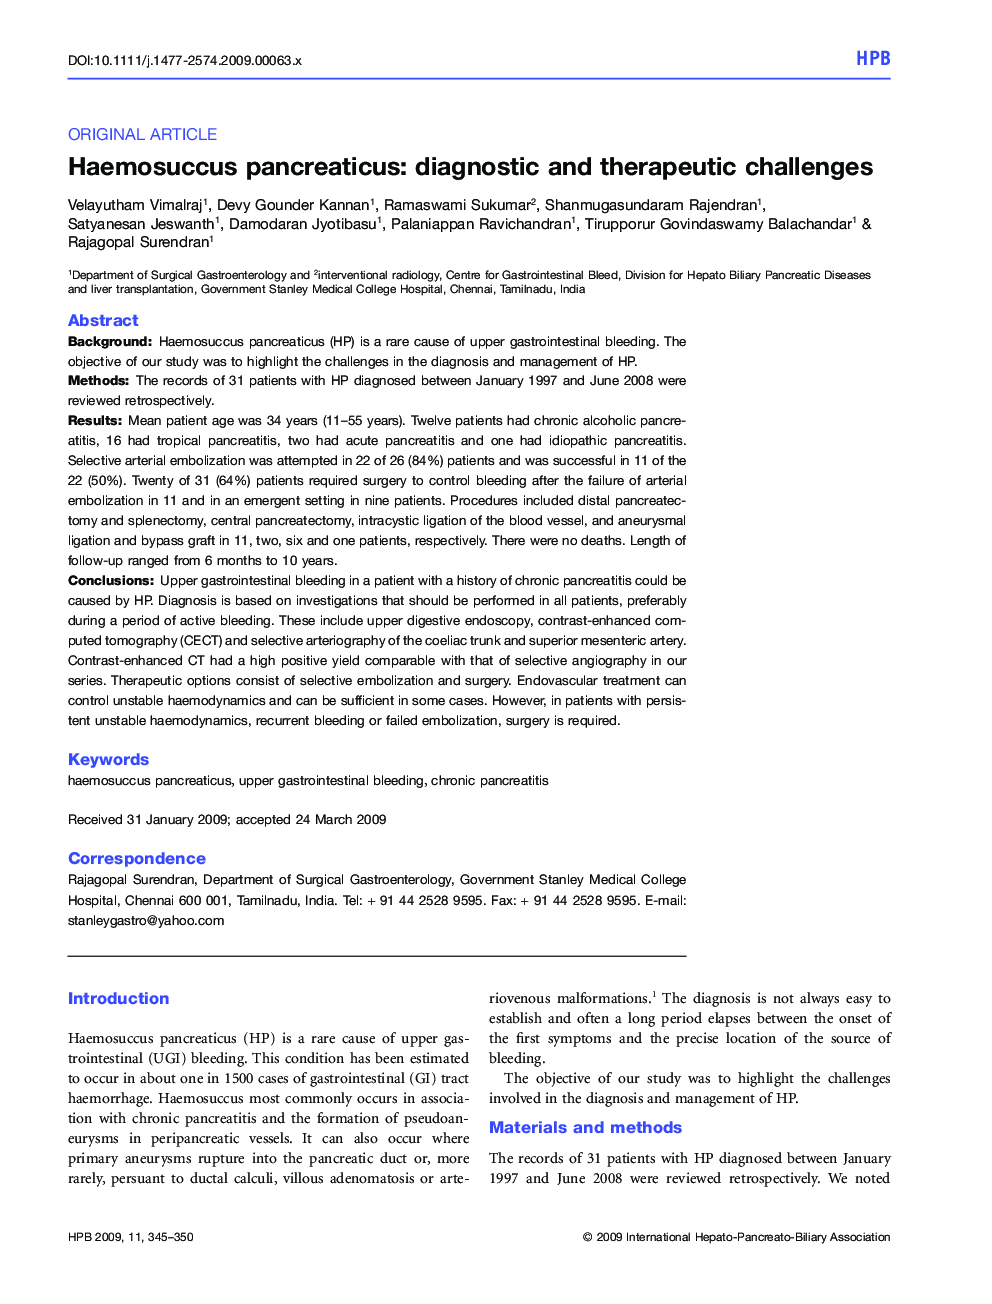 Haemosuccus pancreaticus: diagnostic and therapeutic challenges